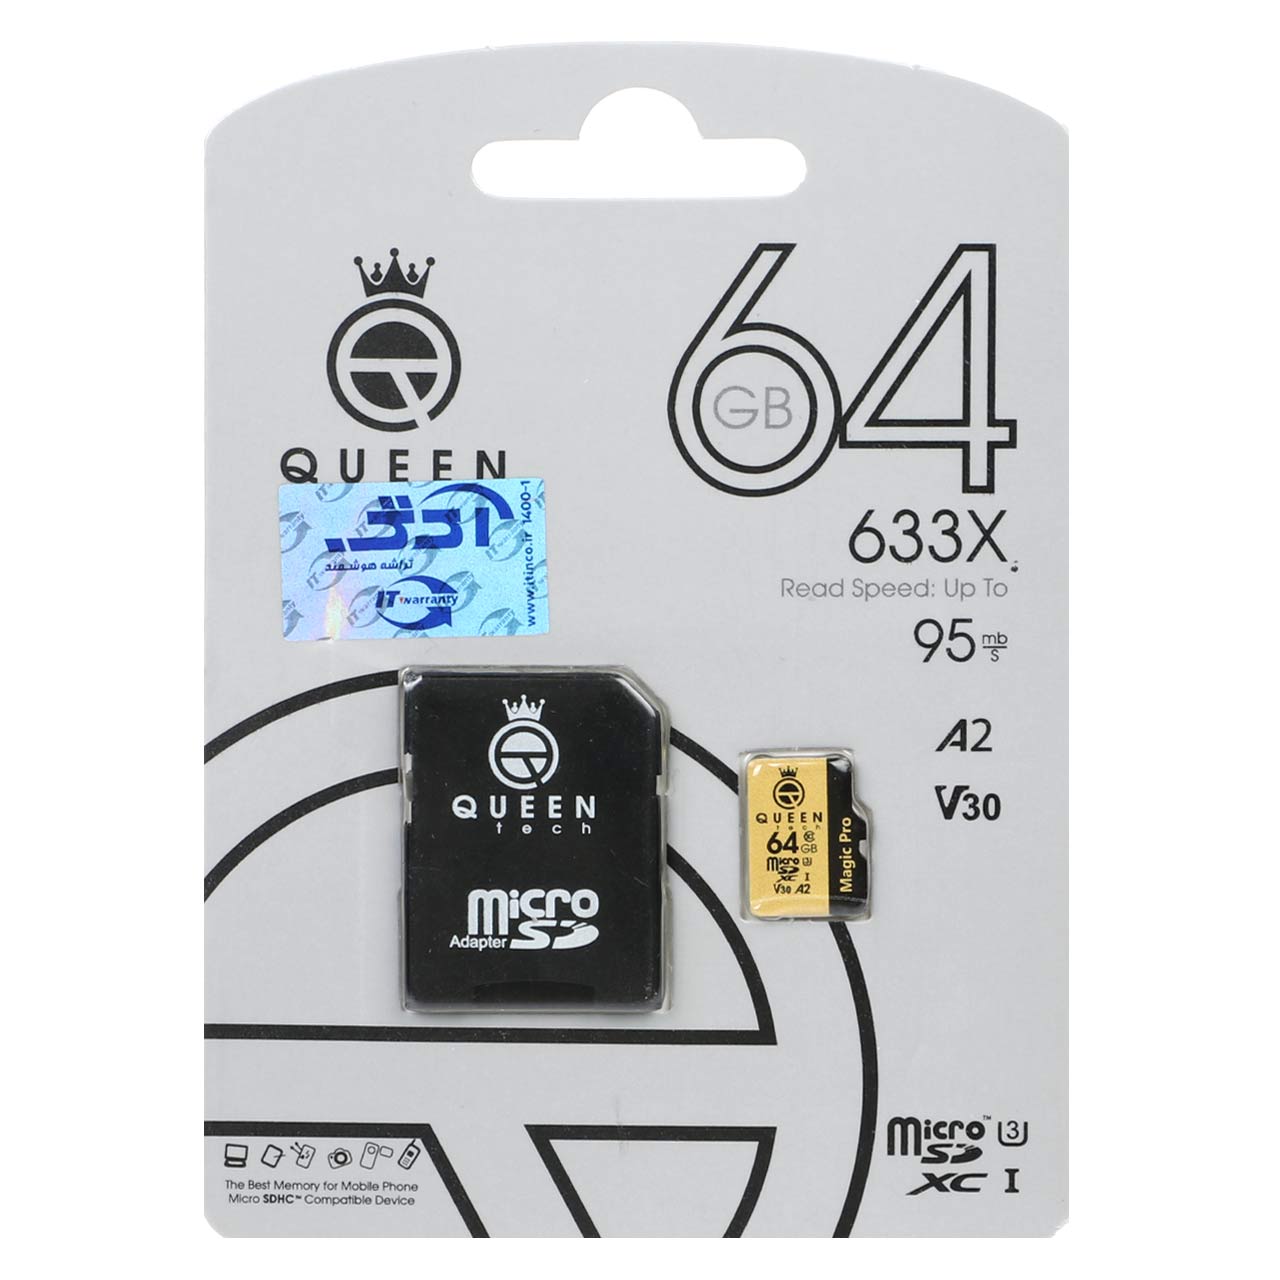 رم Queen tech microSDHC & adapter U3 Class 10 633X -95M - 64GB